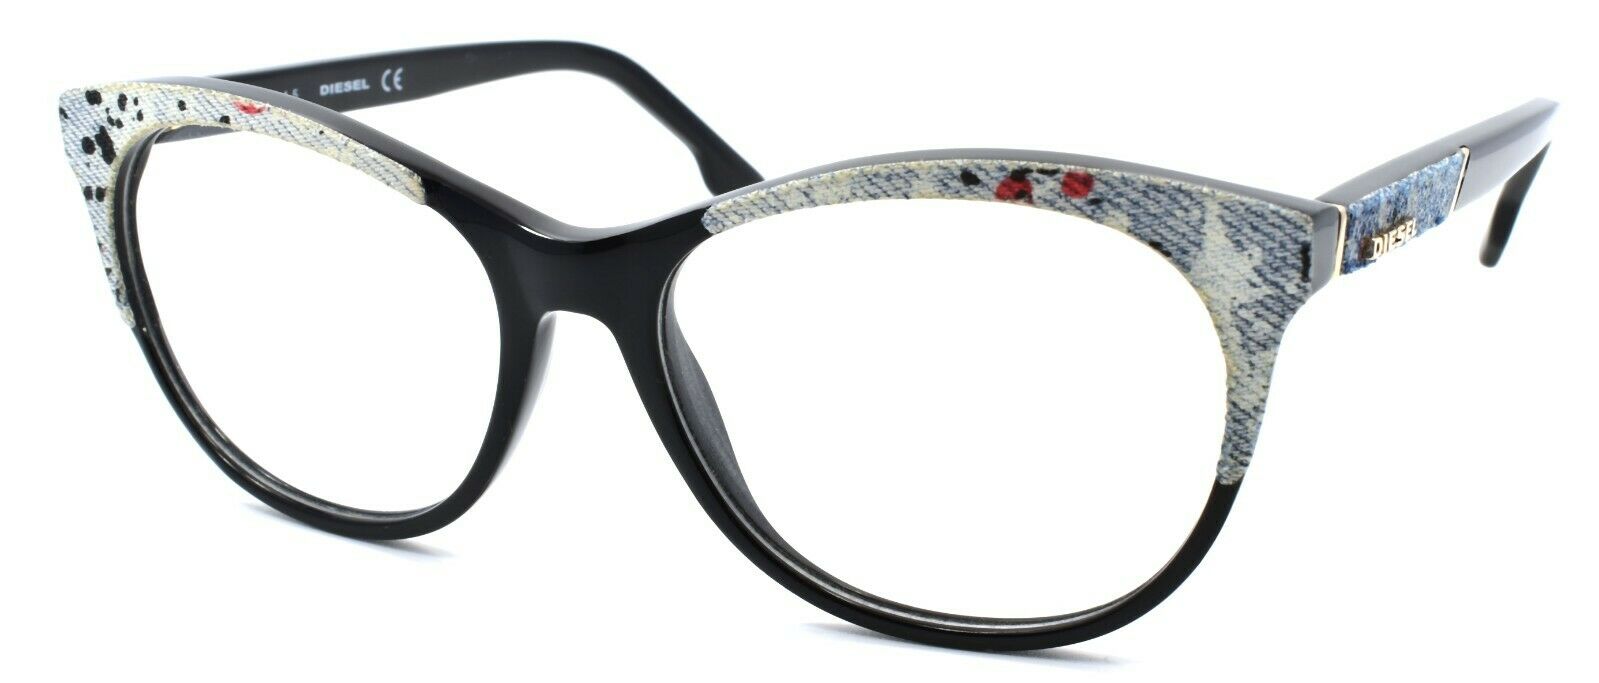 1-Diesel DL5155 005 Women's Eyeglasses Frames 55-16-140 Black / Spotted Denim-664689707751-IKSpecs